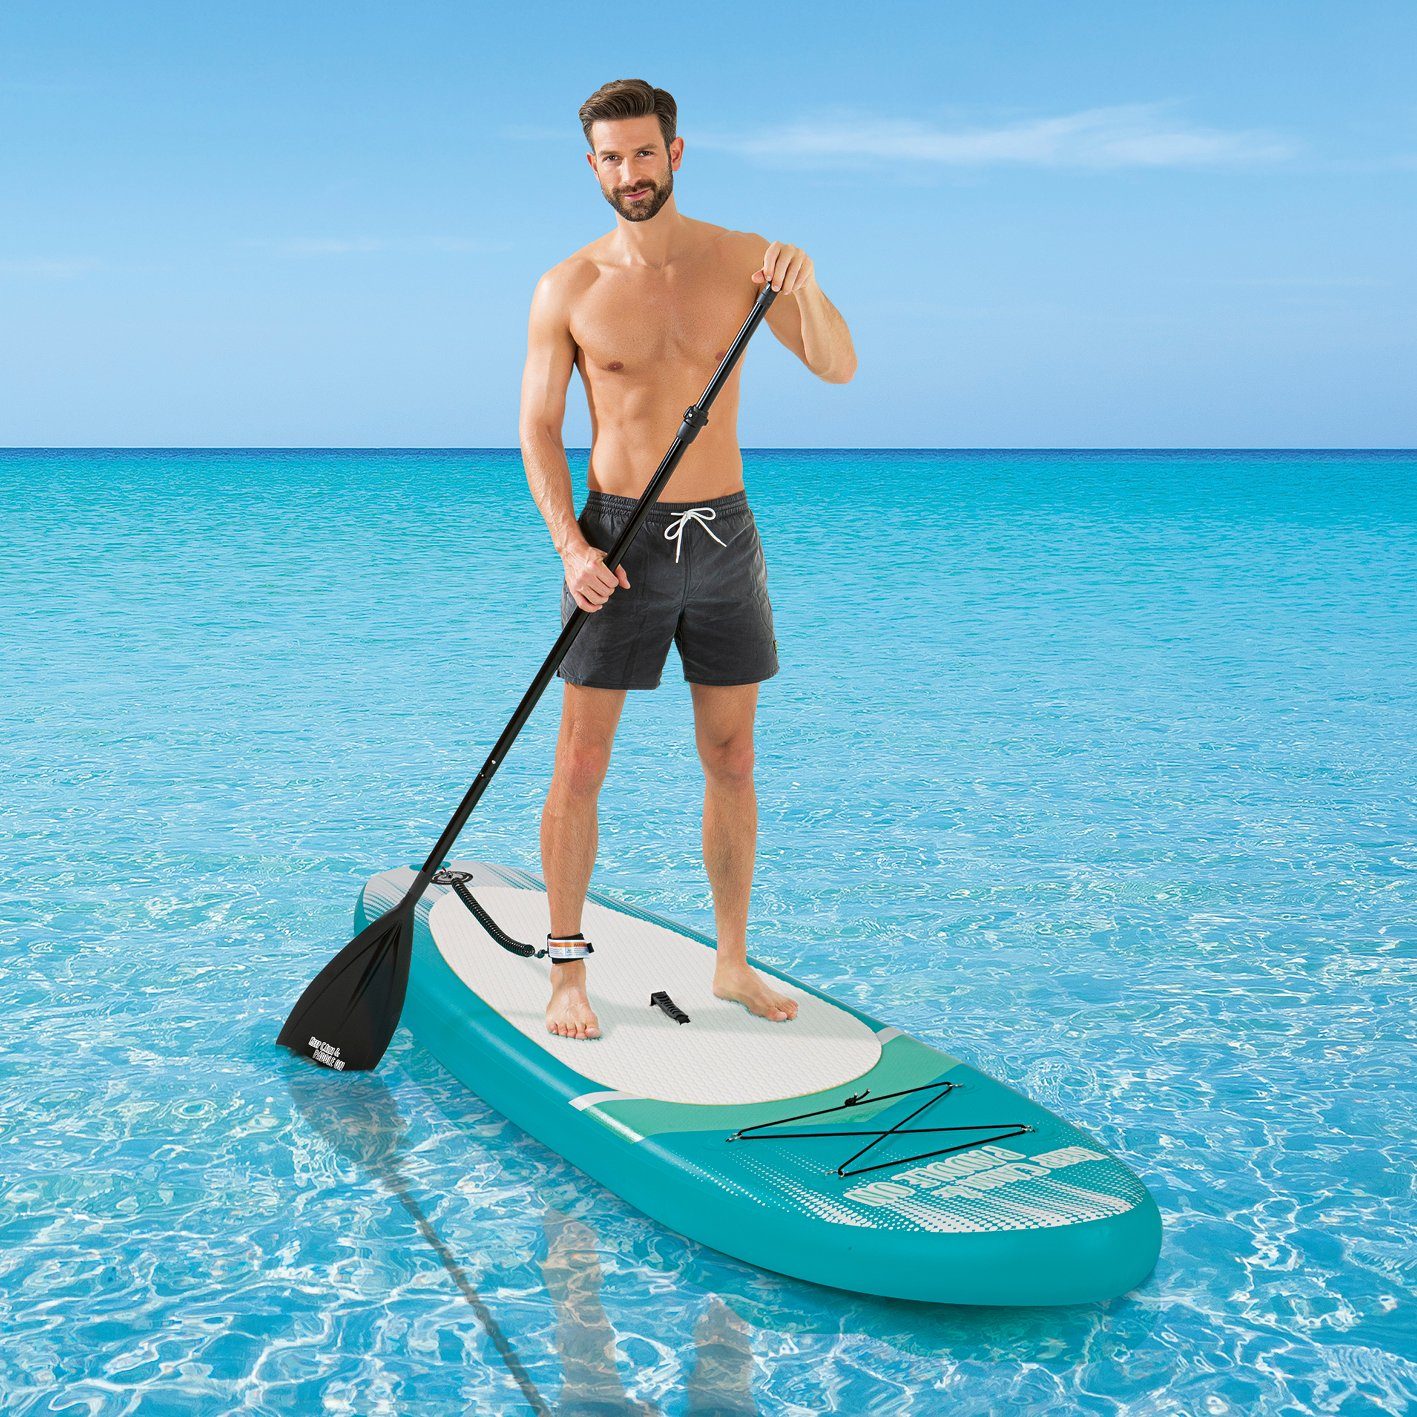 MAXXMEE Inflatable Paddel 300 SUP-Board SUP Stand türkis/weiß up Komplett Paddling Paddle-Board Board 110 cm, kg, Zubehör, inkl. Set Stand-Up